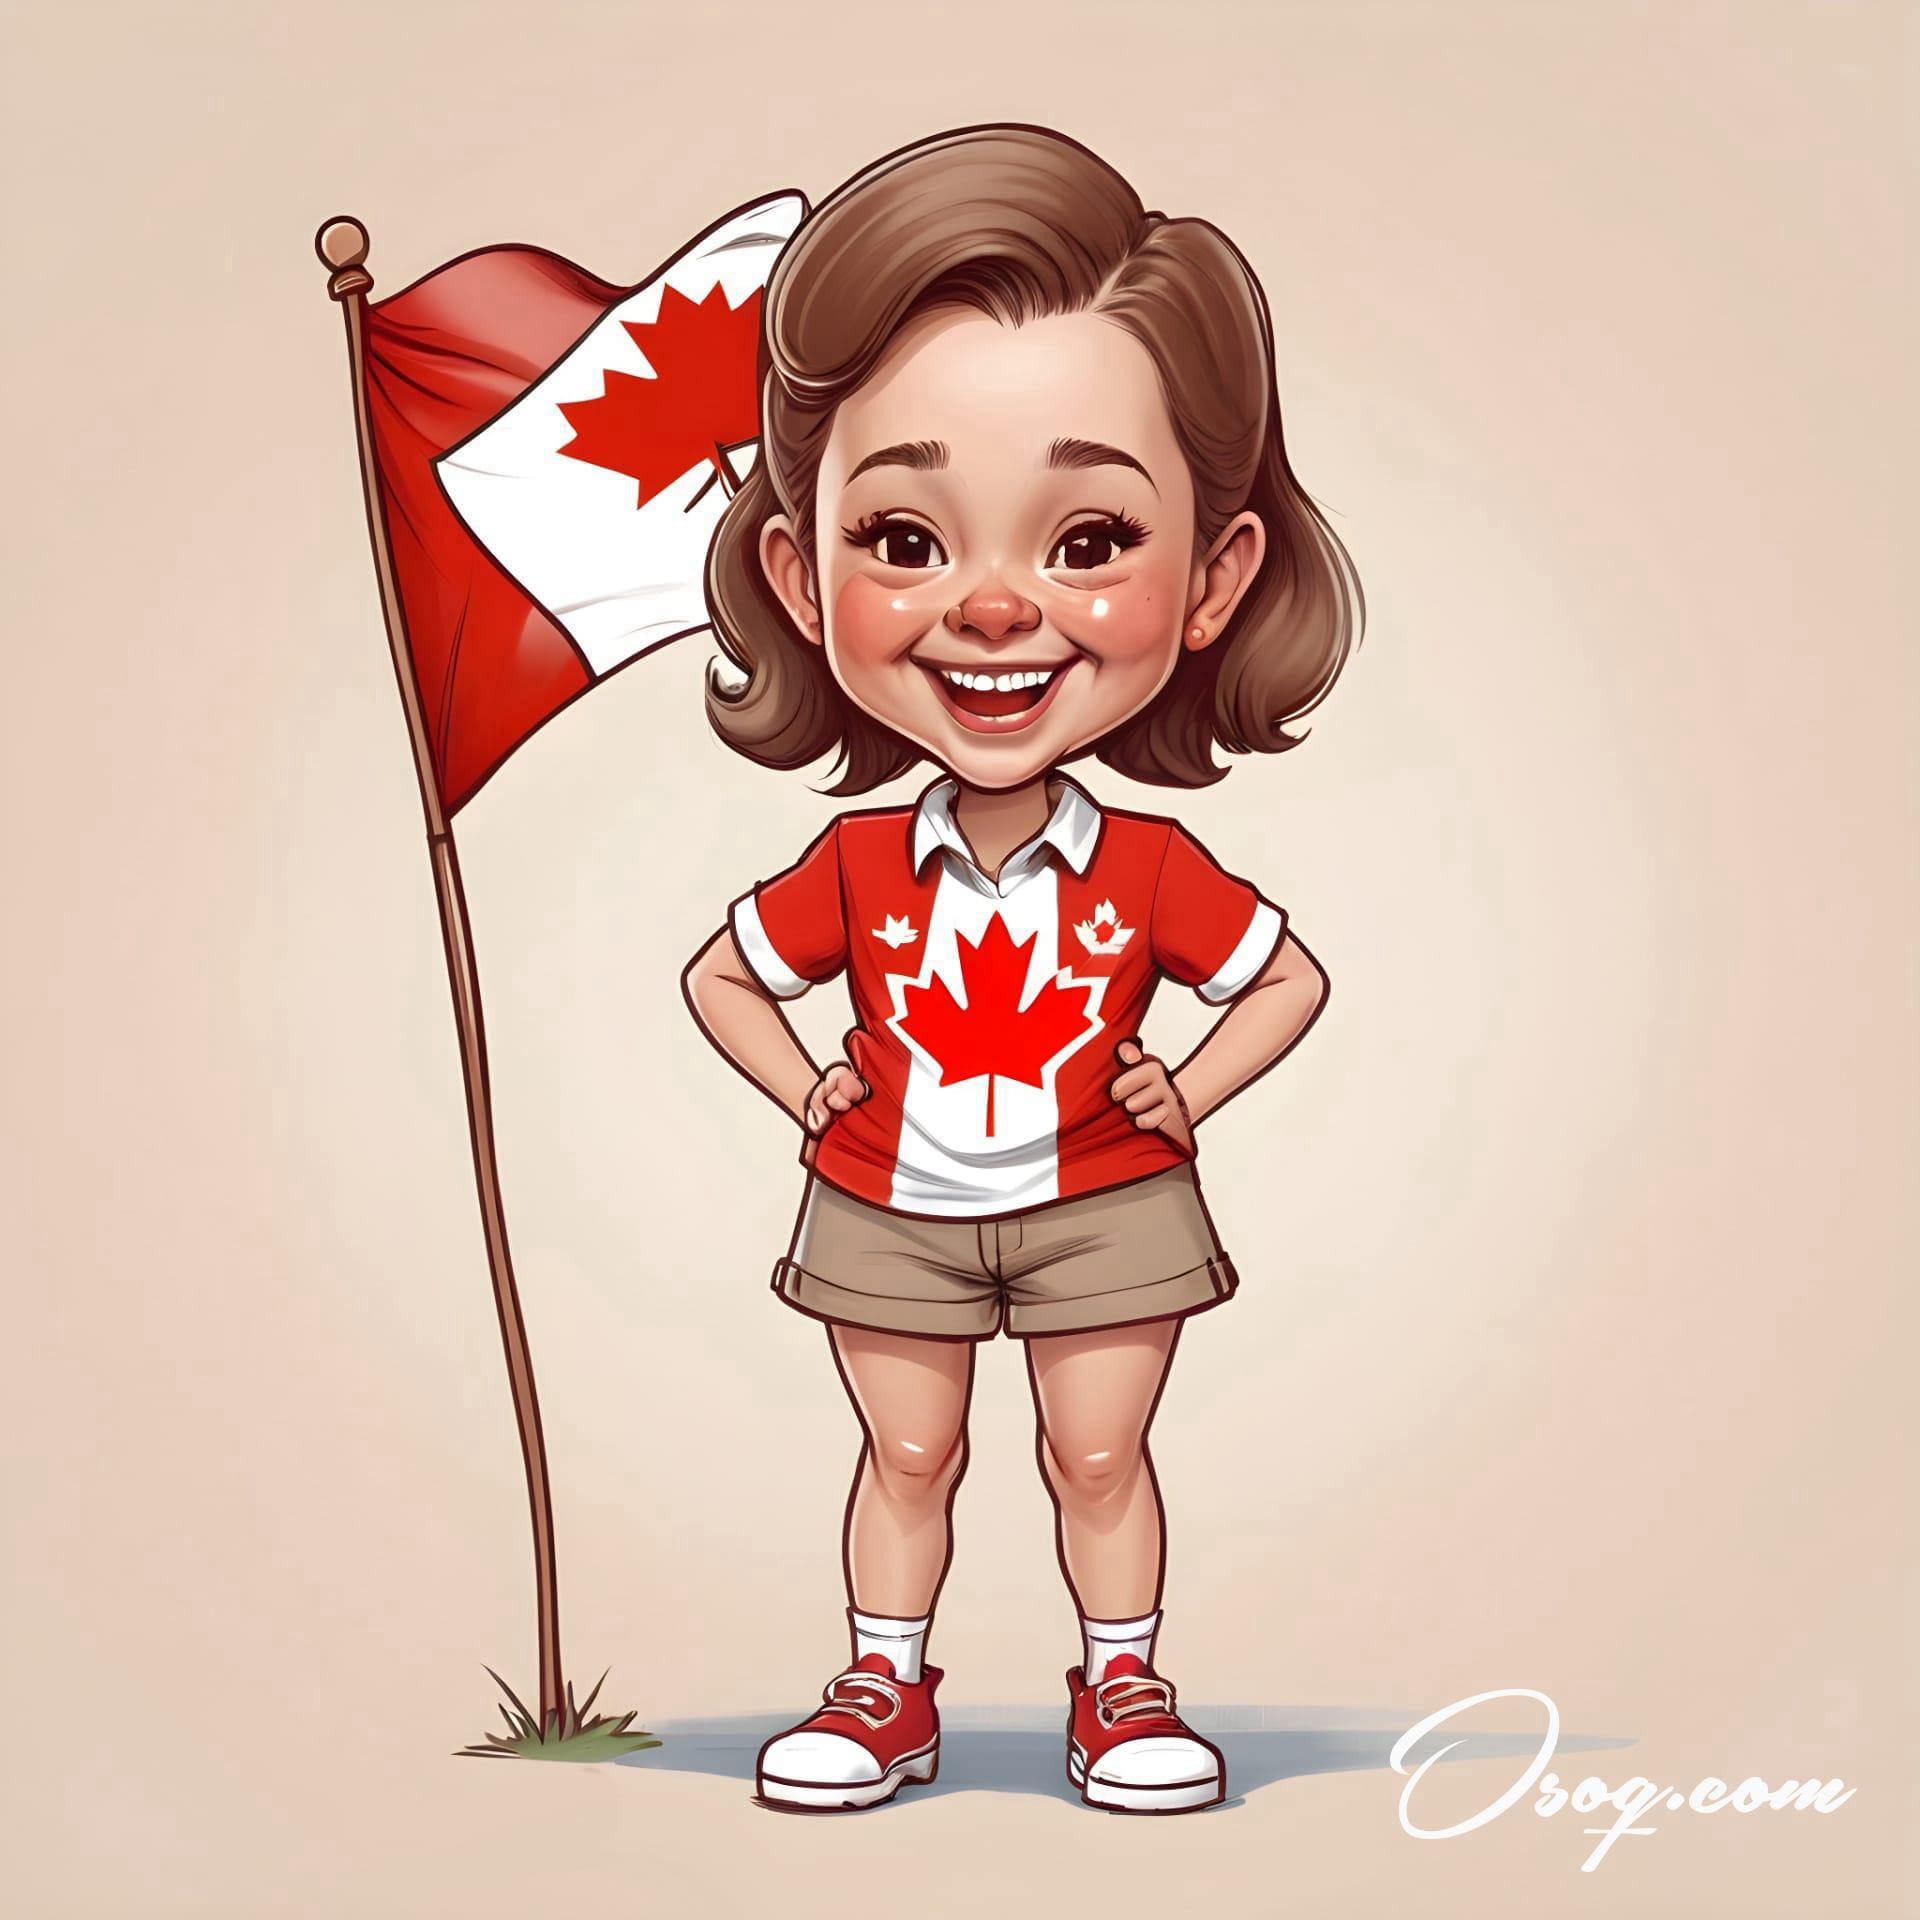 Canada cartoon 18